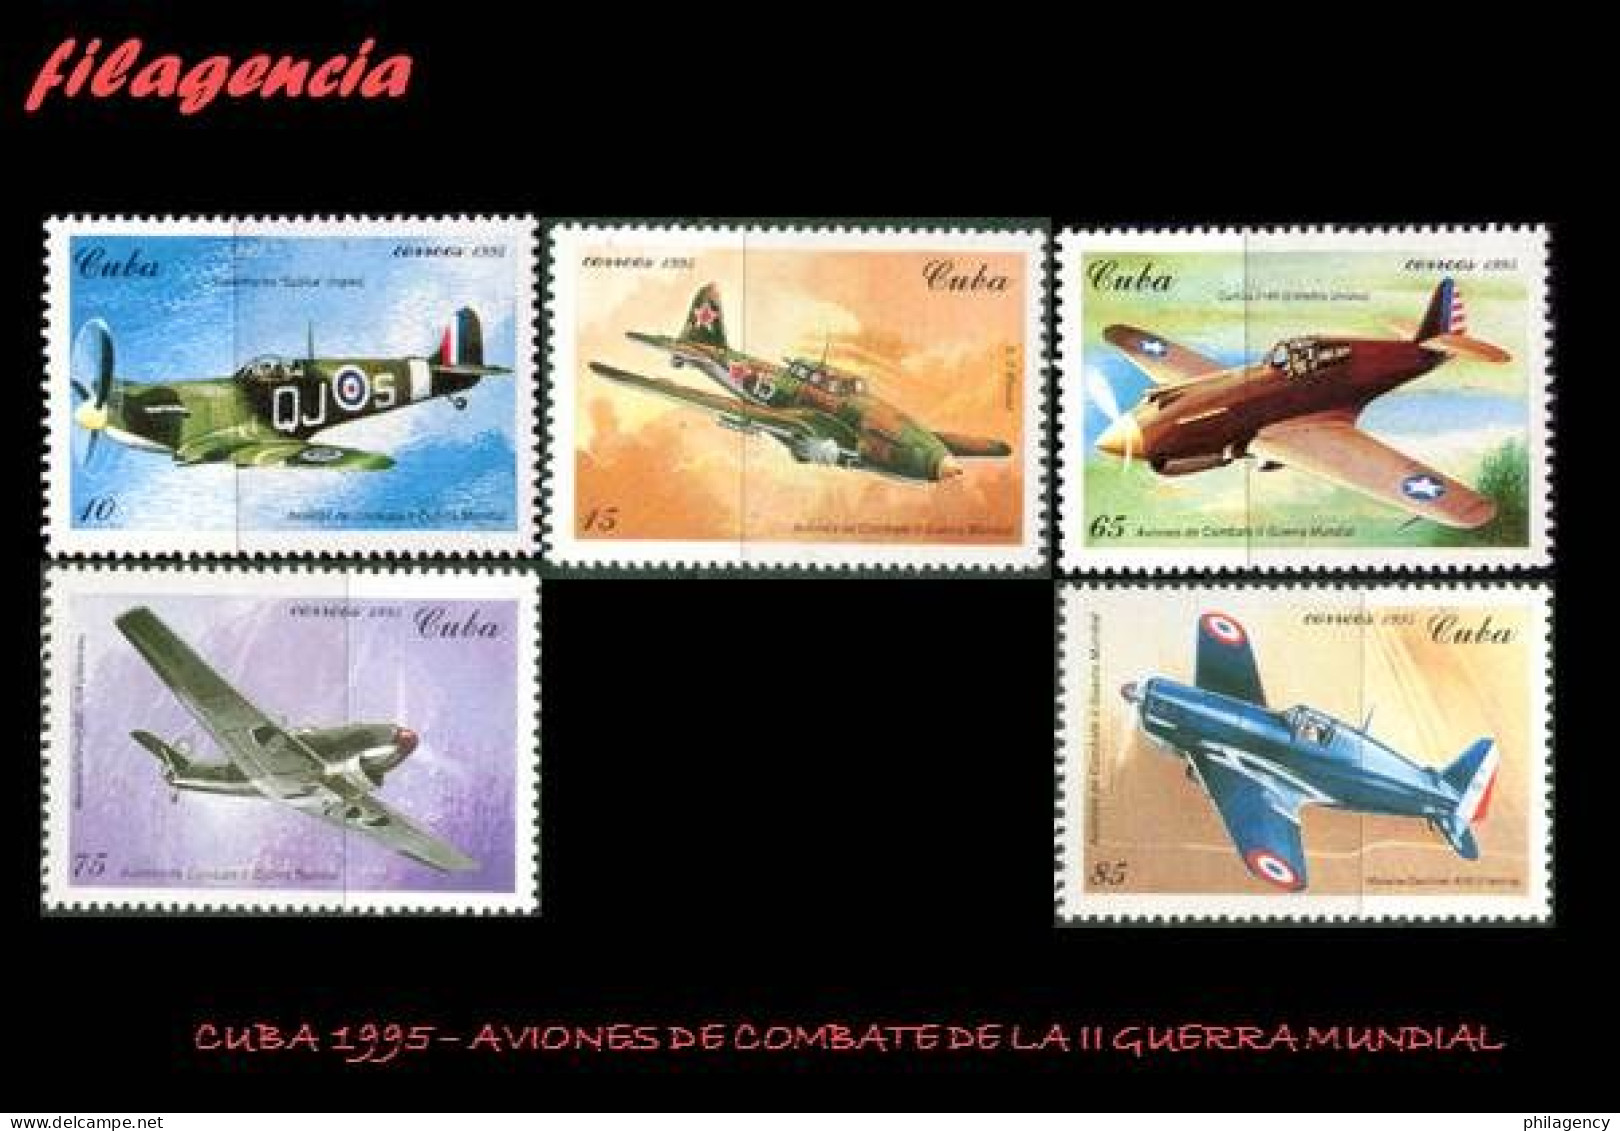 CUBA MINT. 1995-10 AVIONES DE COMBATE DE LA II GUERRA MUNDIAL - Unused Stamps